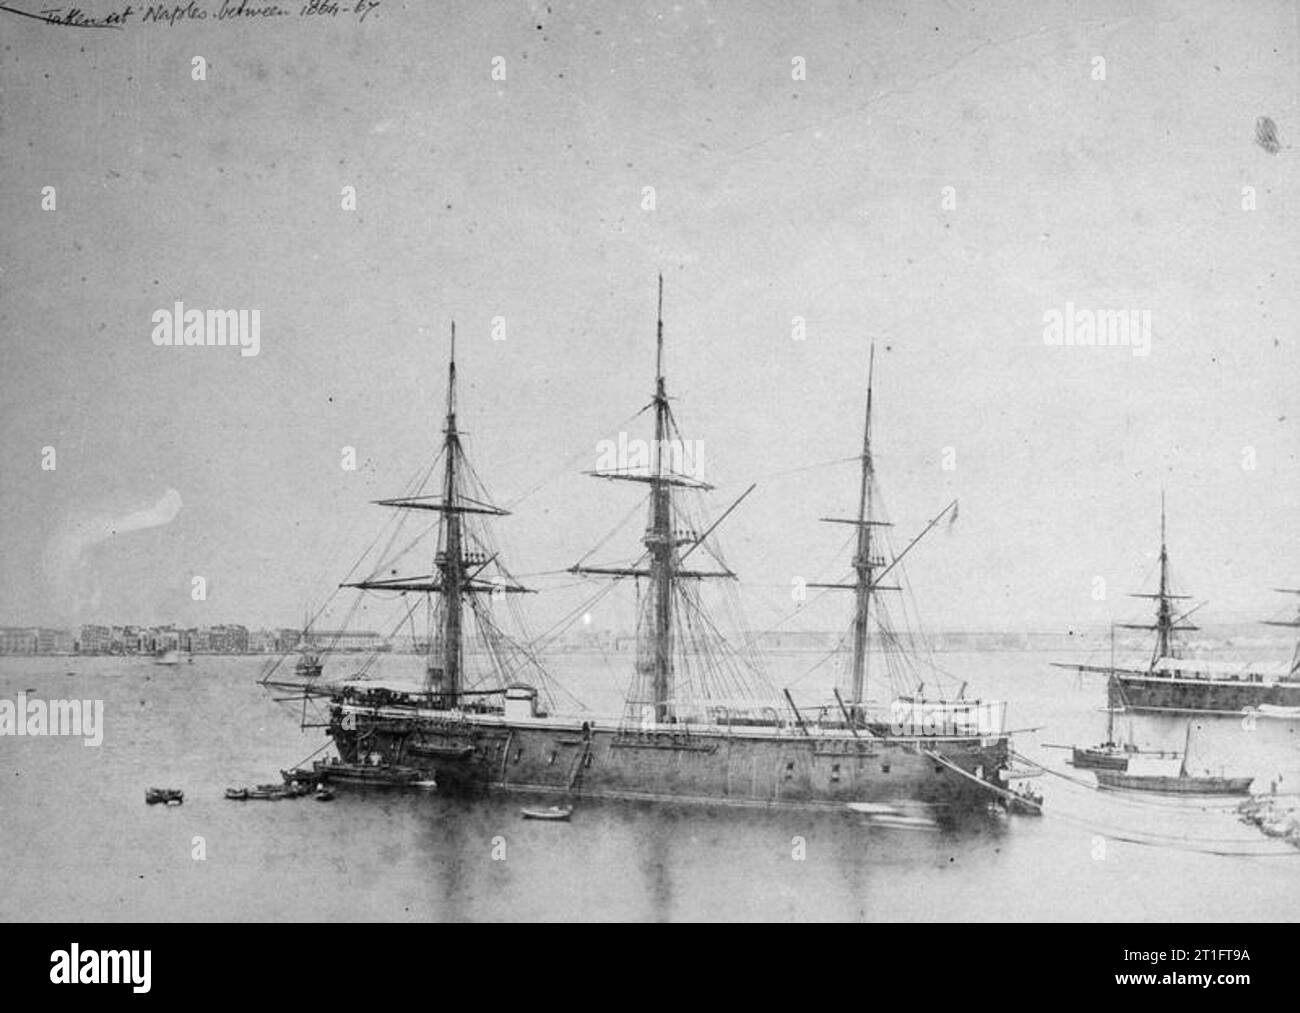 Royal Navy Ship Pre-1914 HMS Royal Oak Prince Consort-class ironclad. Taken at Naples between 1864-1867, 3/4 broadside, stern view. Stock Photo